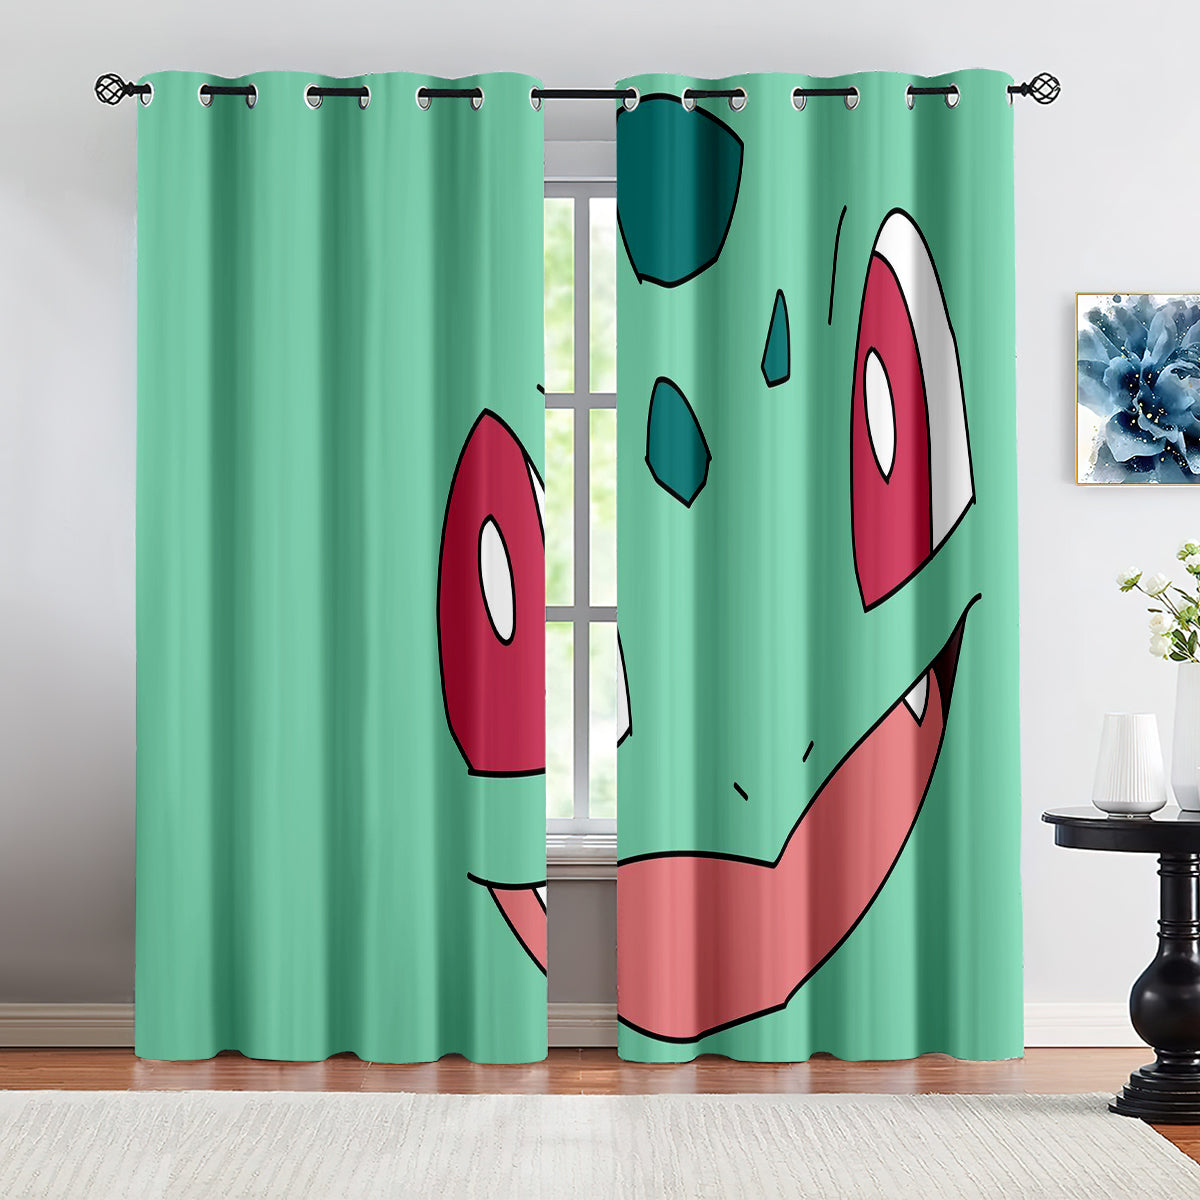 Pokemon Bulbasaur  Blackout Curtains Drapes for Window Treatment Set